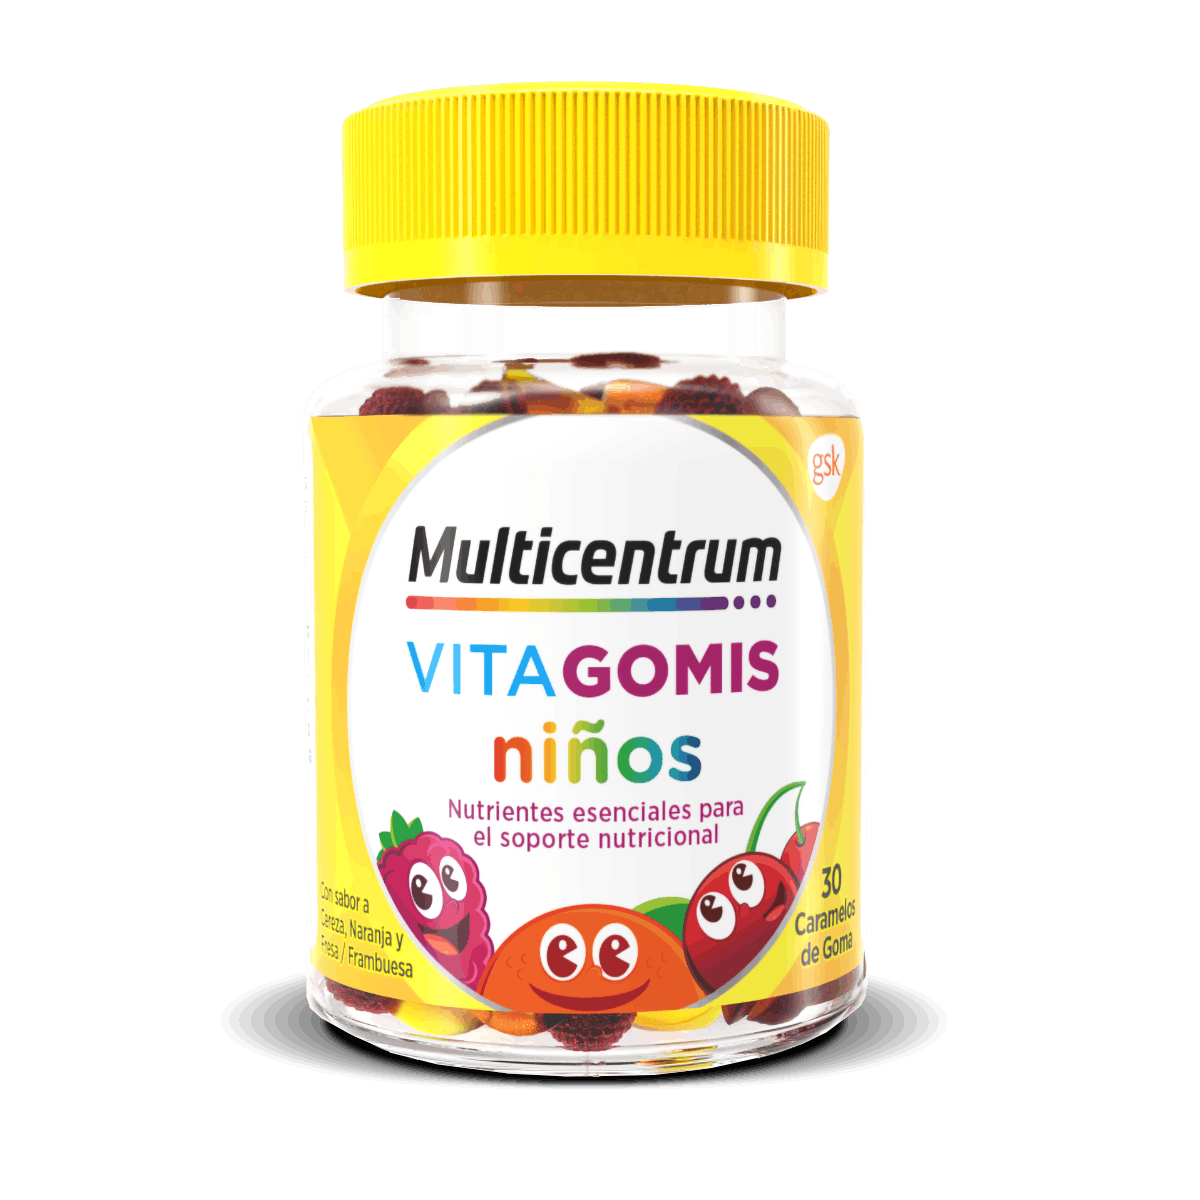 Multicentrum Vitagomis caramelos para niños con Vitaminas